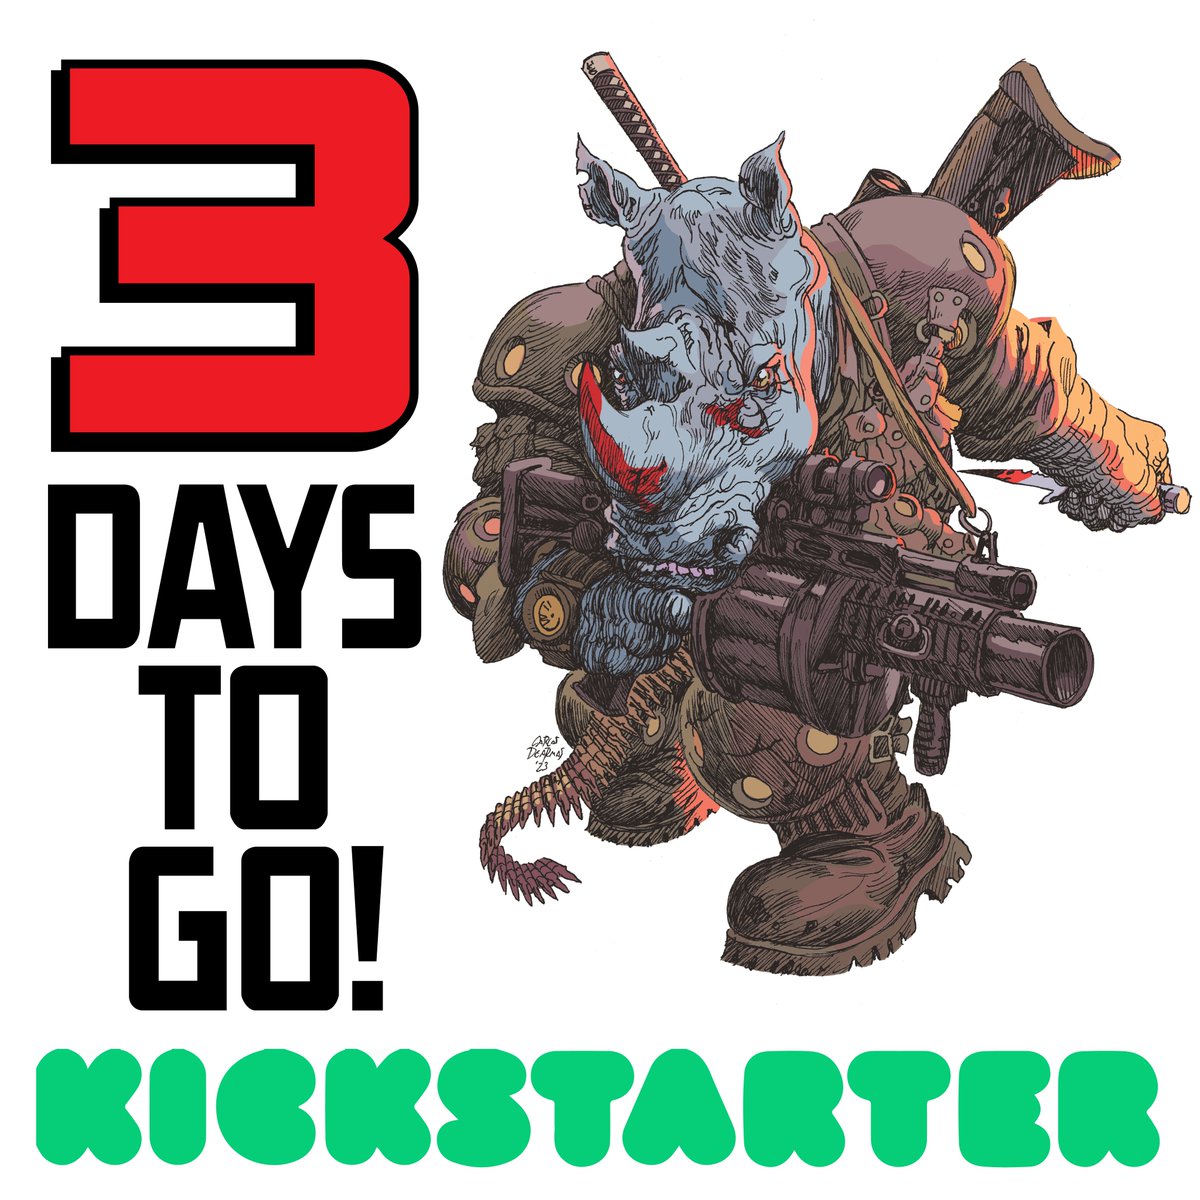 3 Days to go in the Elephantmen Kickstarter!

kickstarter.com/projects/comic…